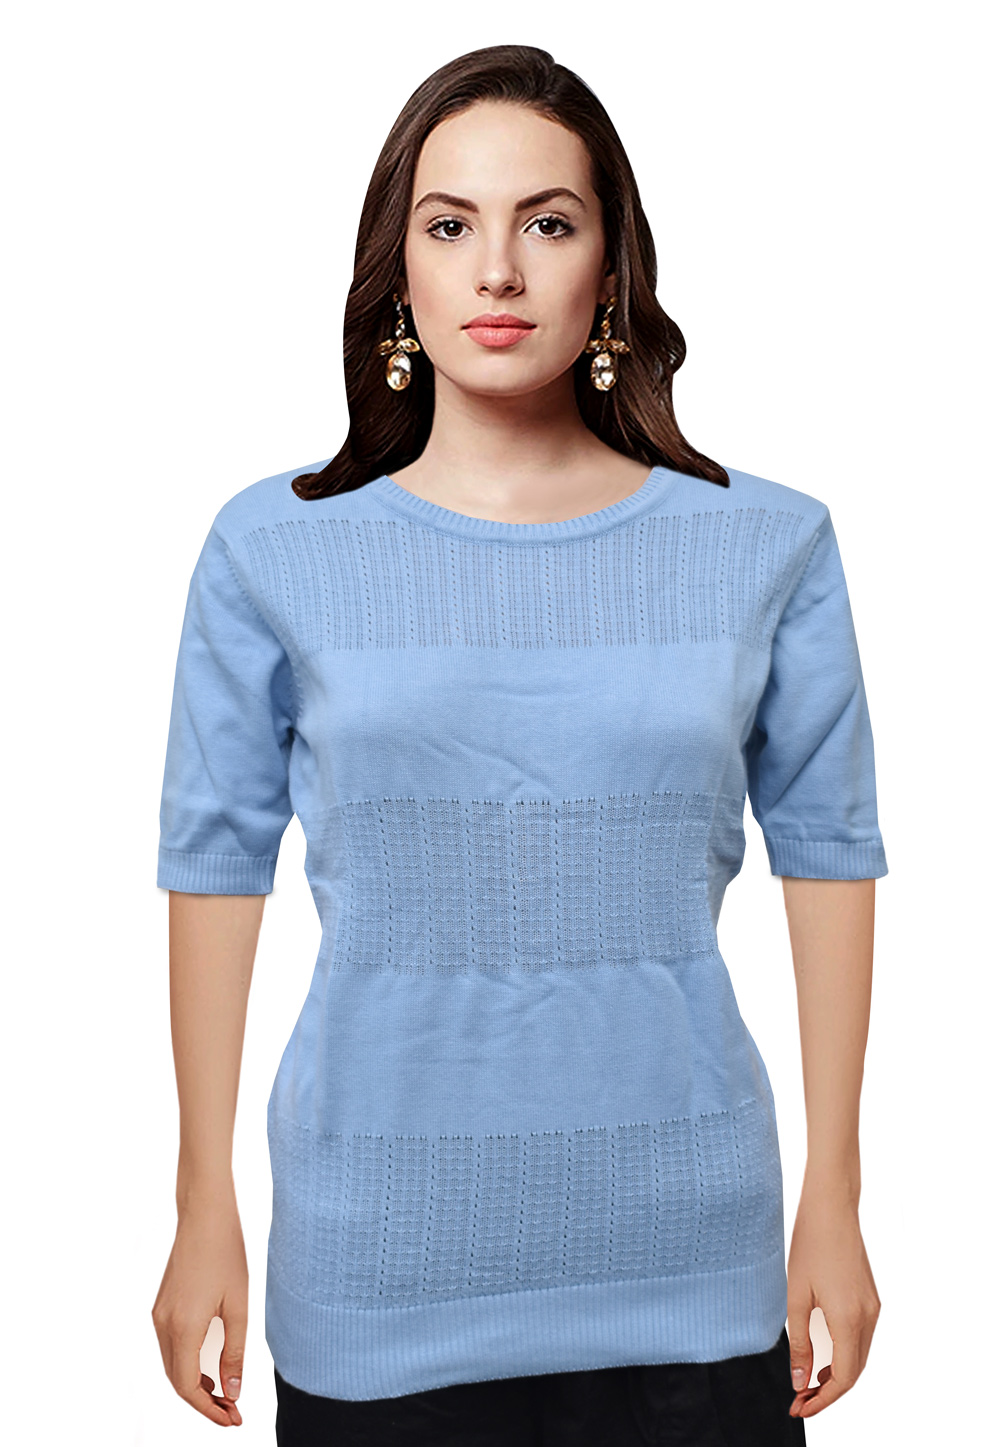 Sky Blue Woolen Knitted Sweater Tops 214252